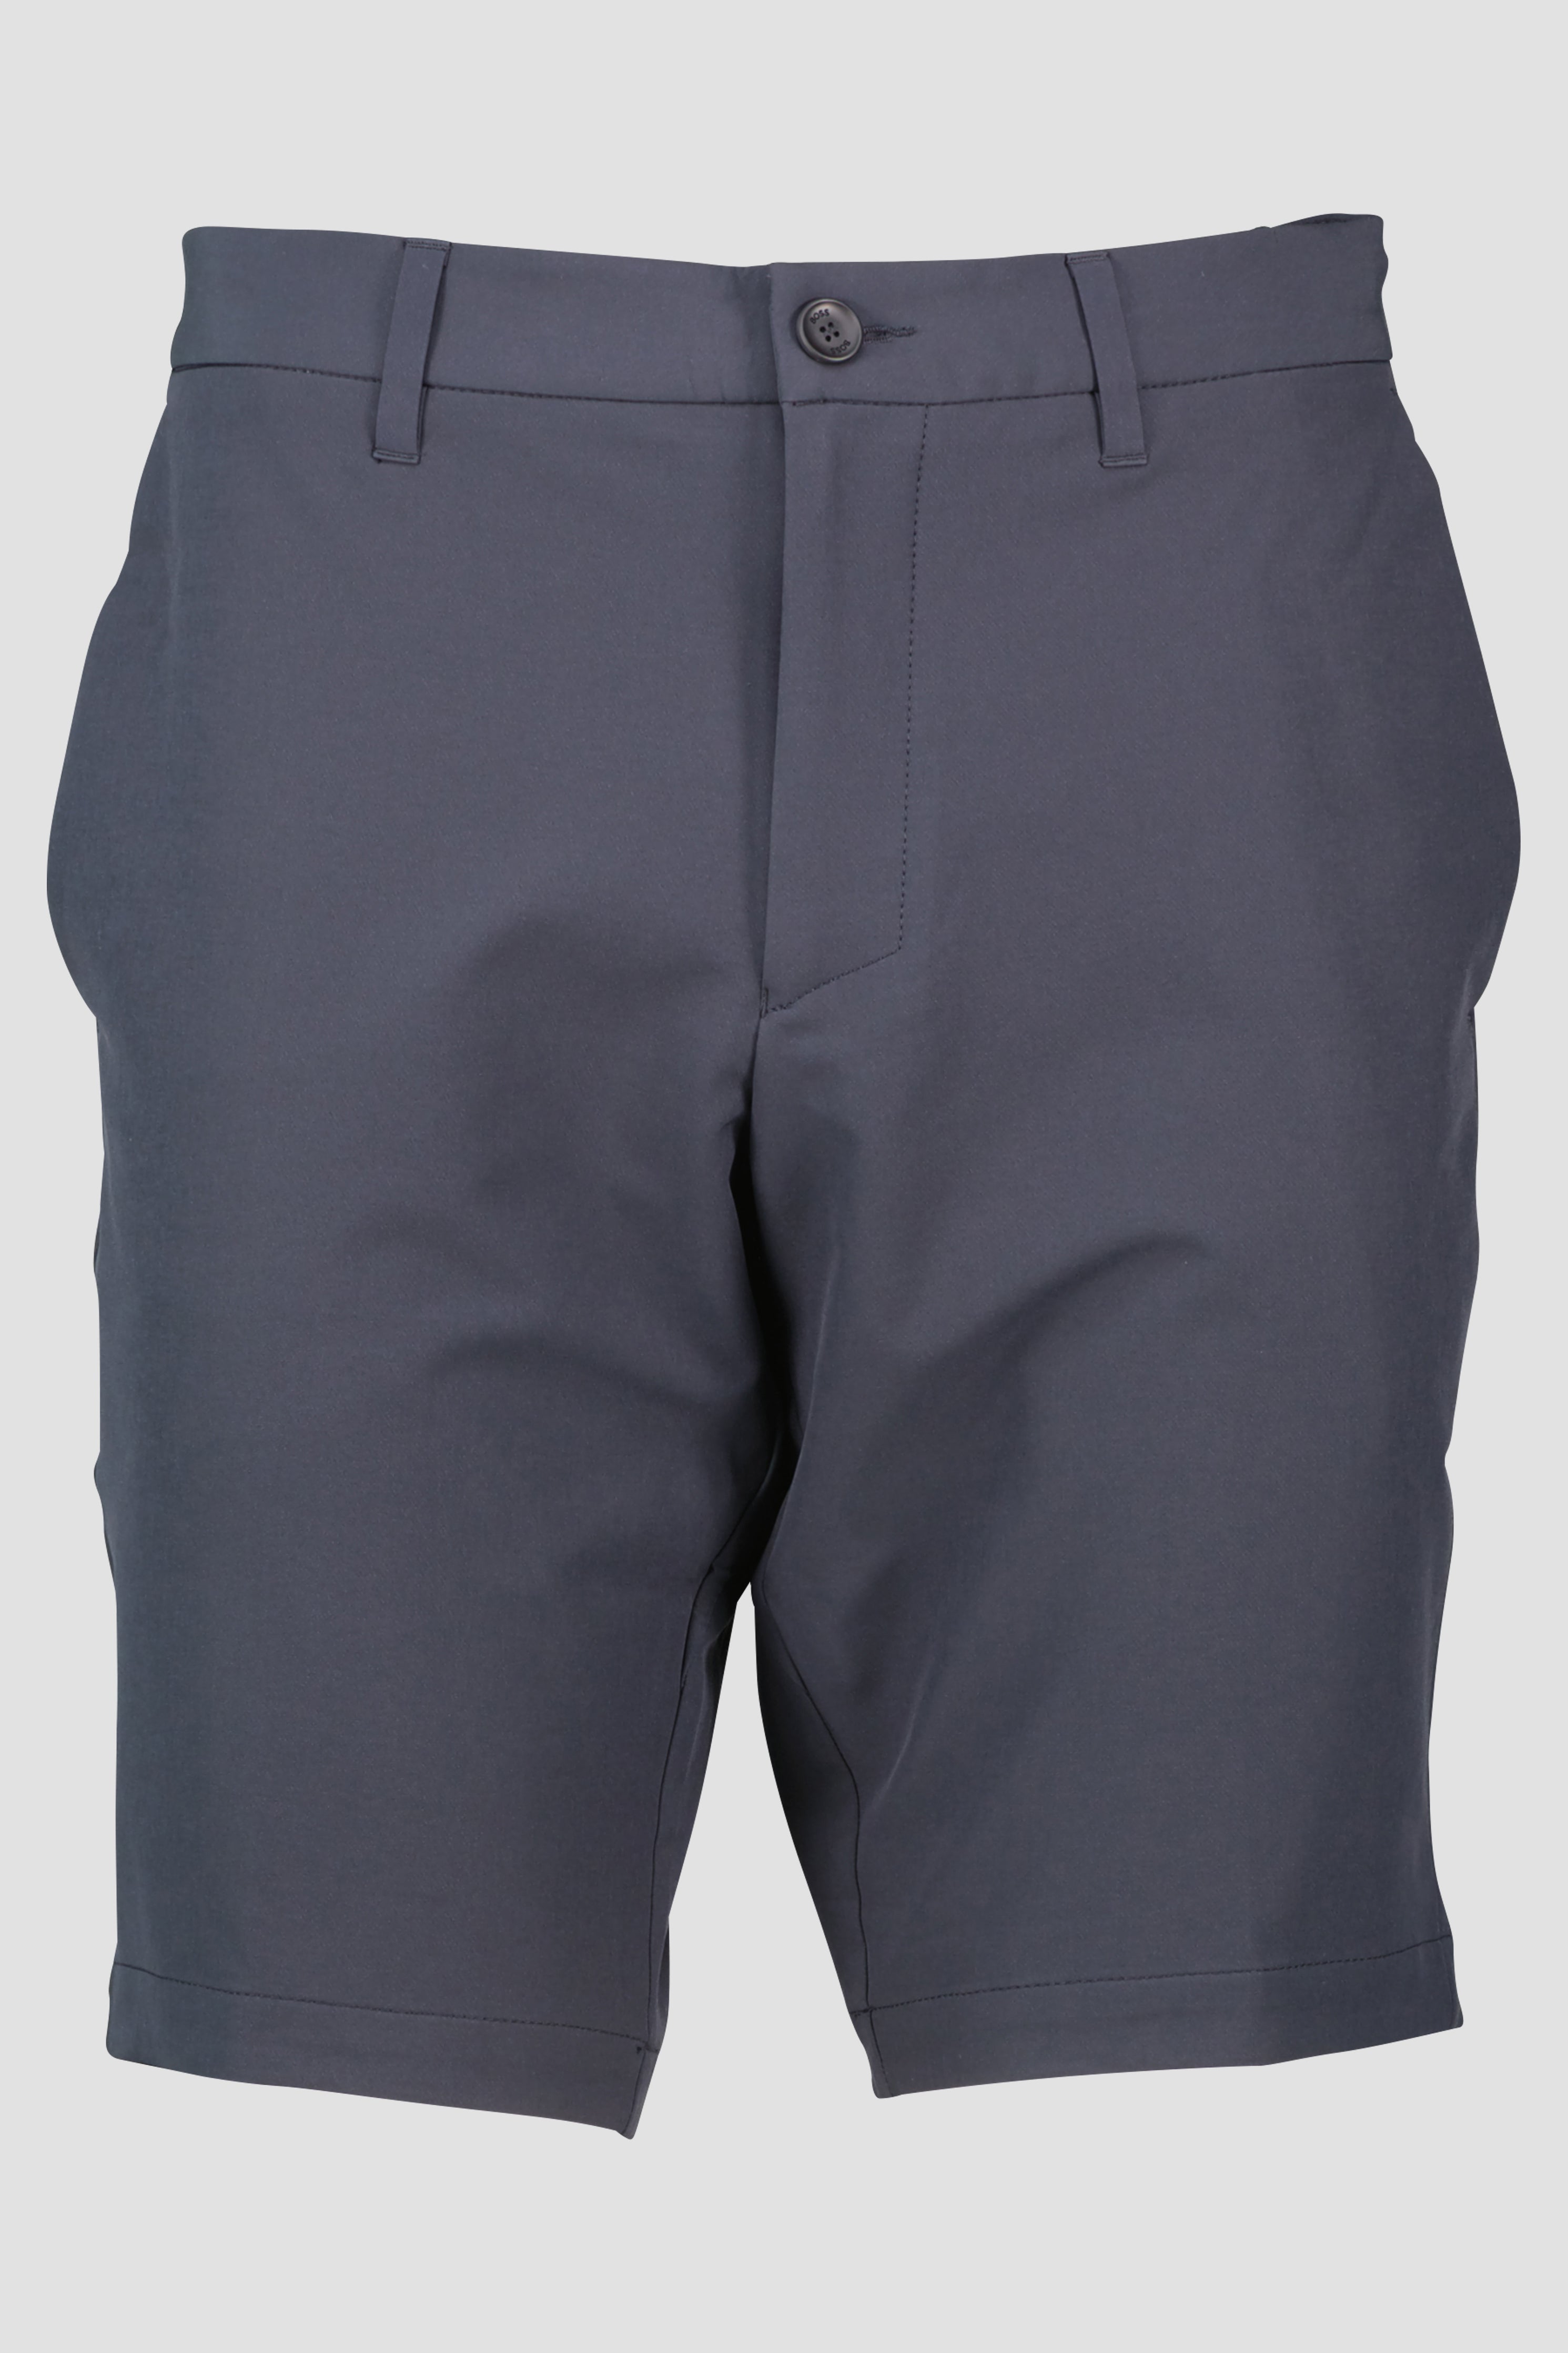 Men's BOSS Green S Commuter Slim Fit Navy Shorts